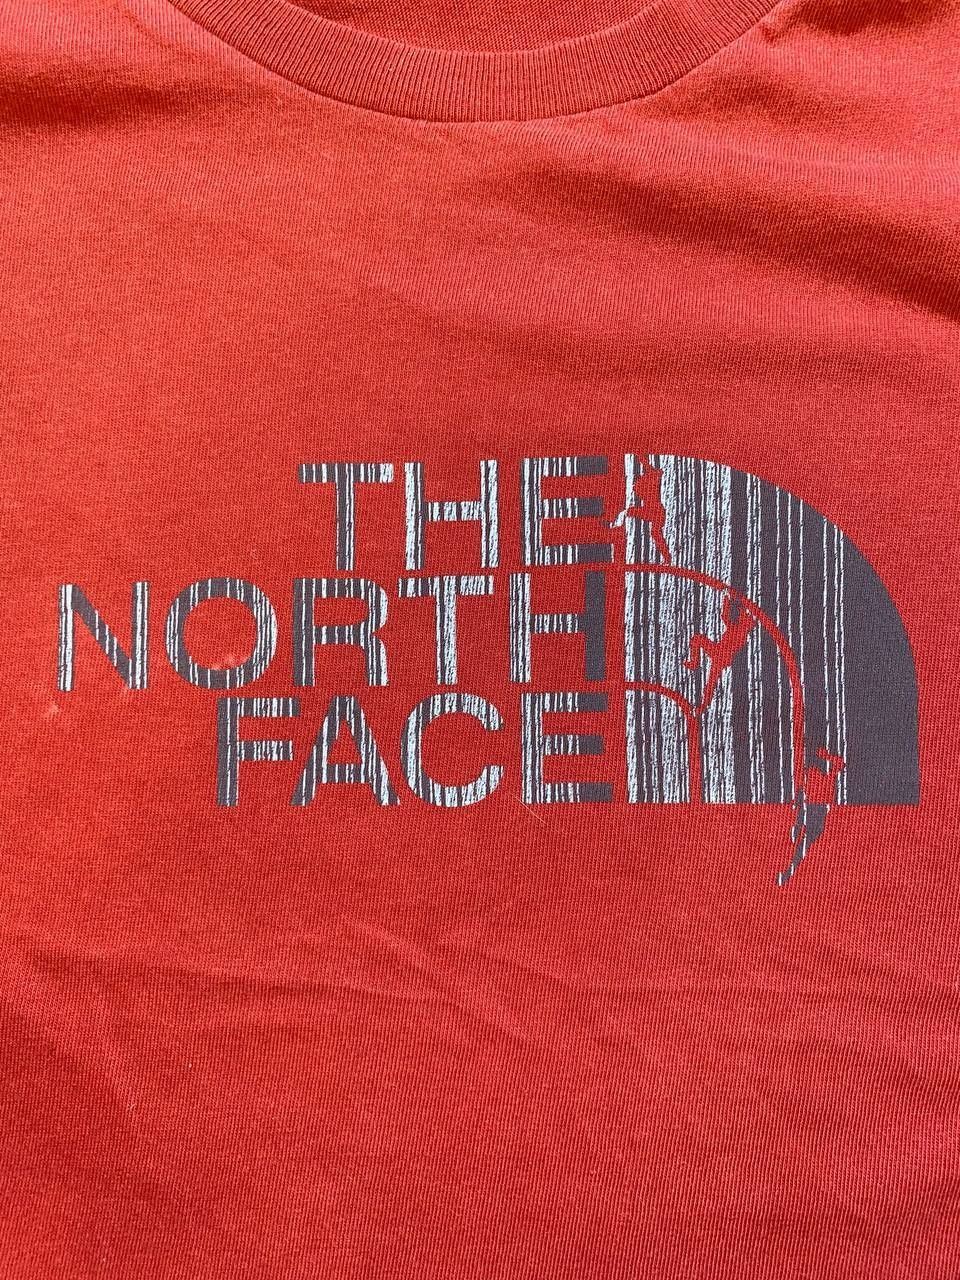 футболка tnf the north face